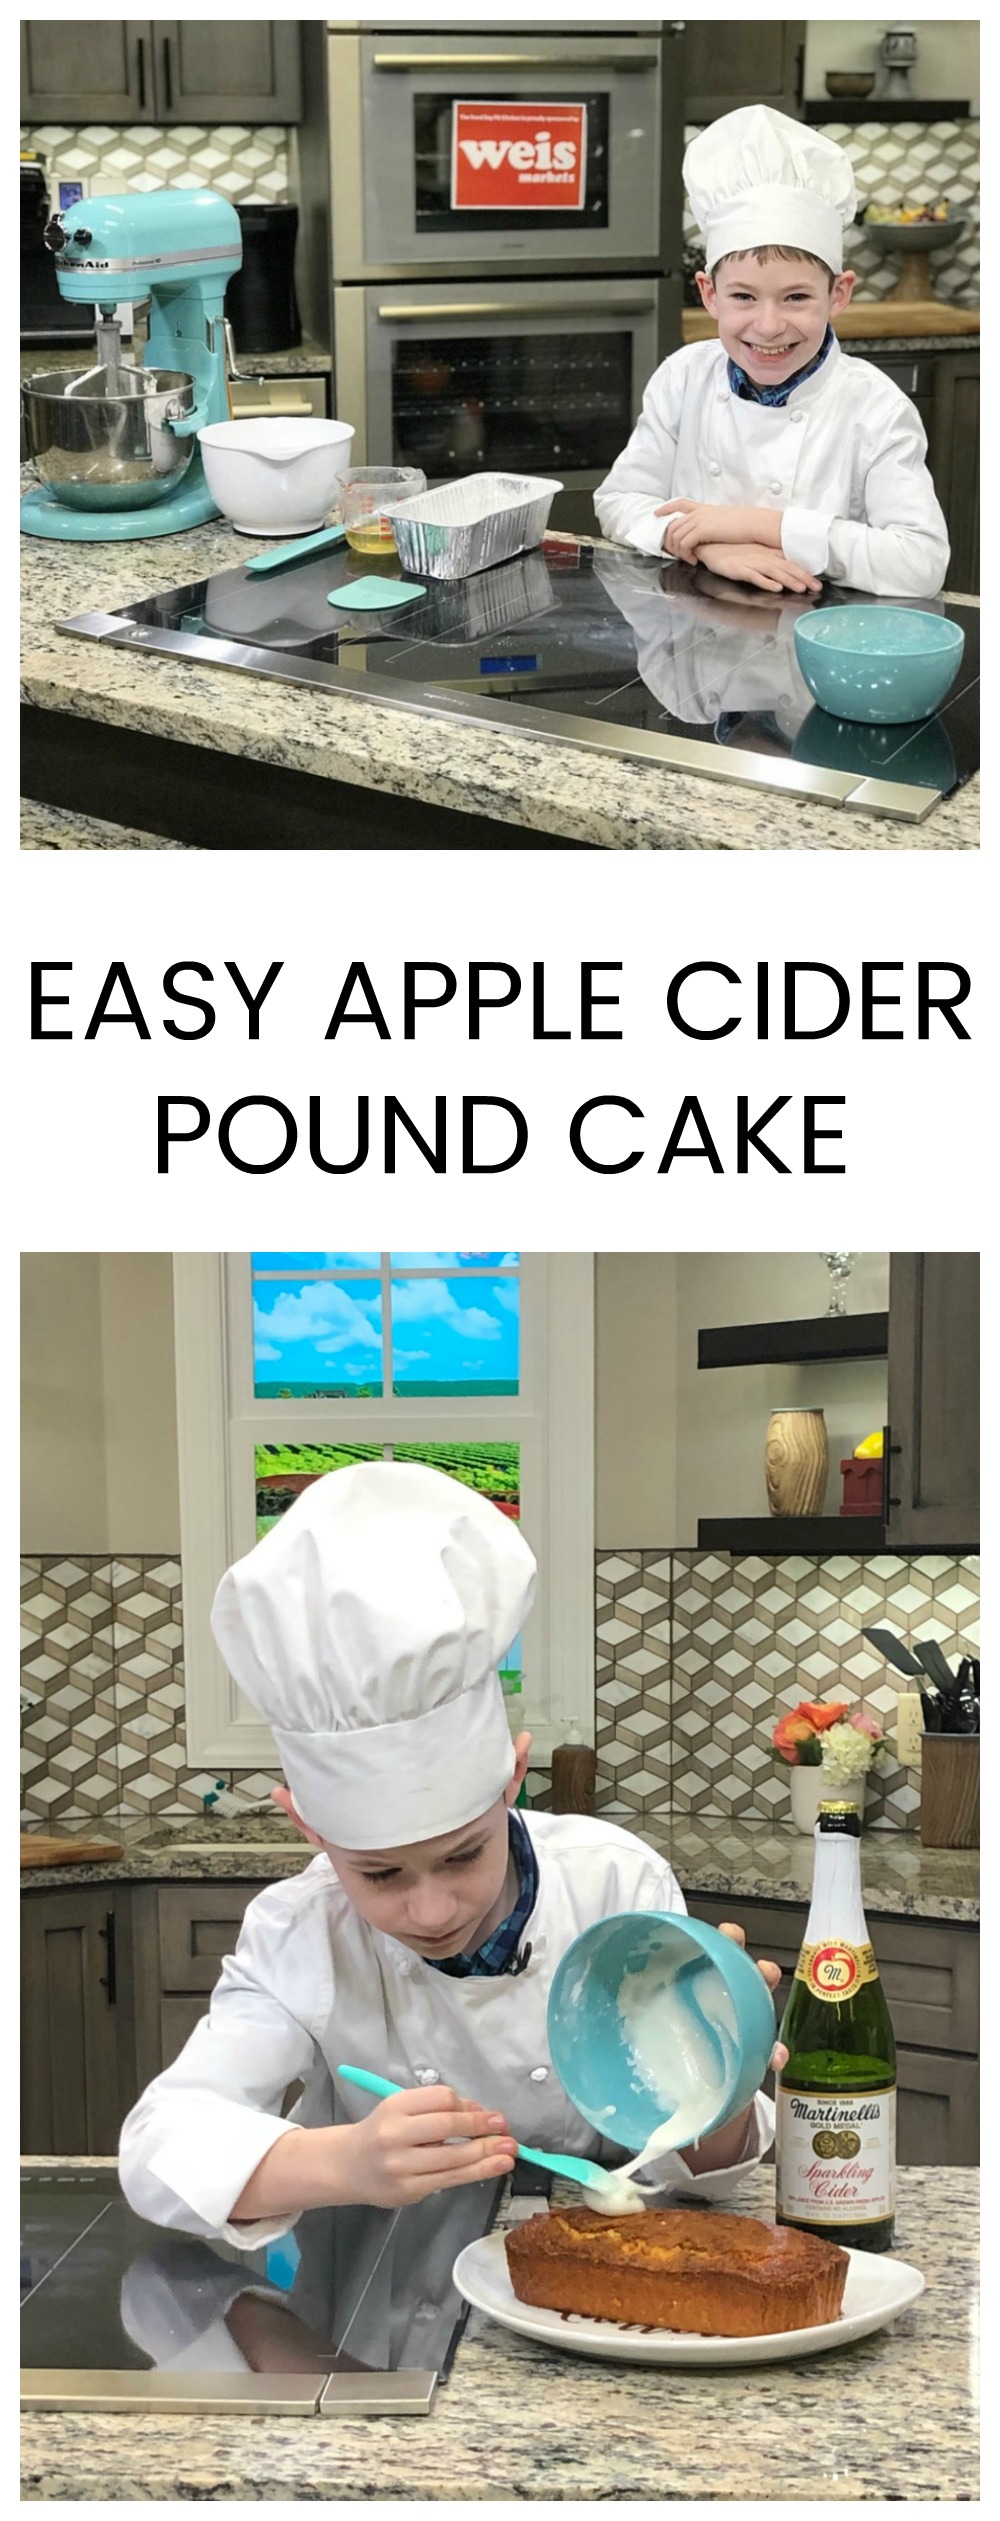 Apple Cider Pound Cake